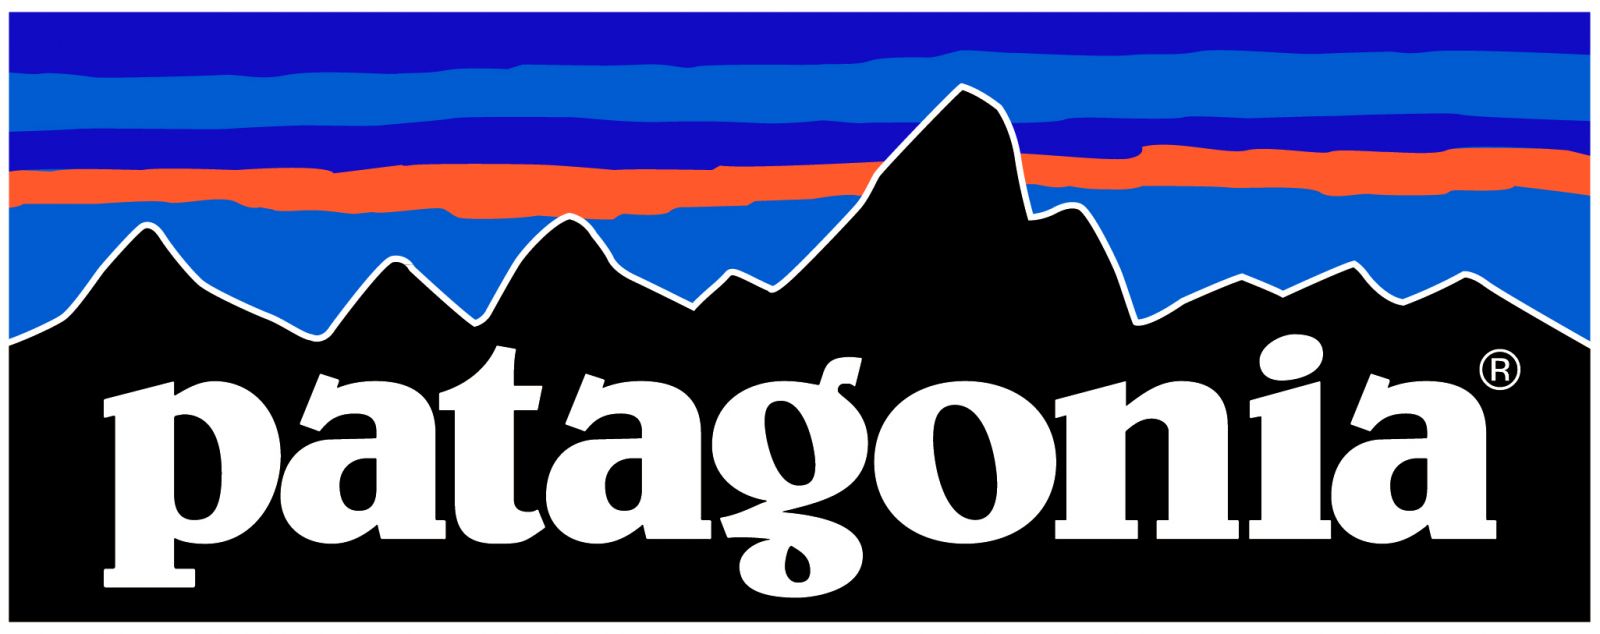 Patagonia clipart #10, Download drawings